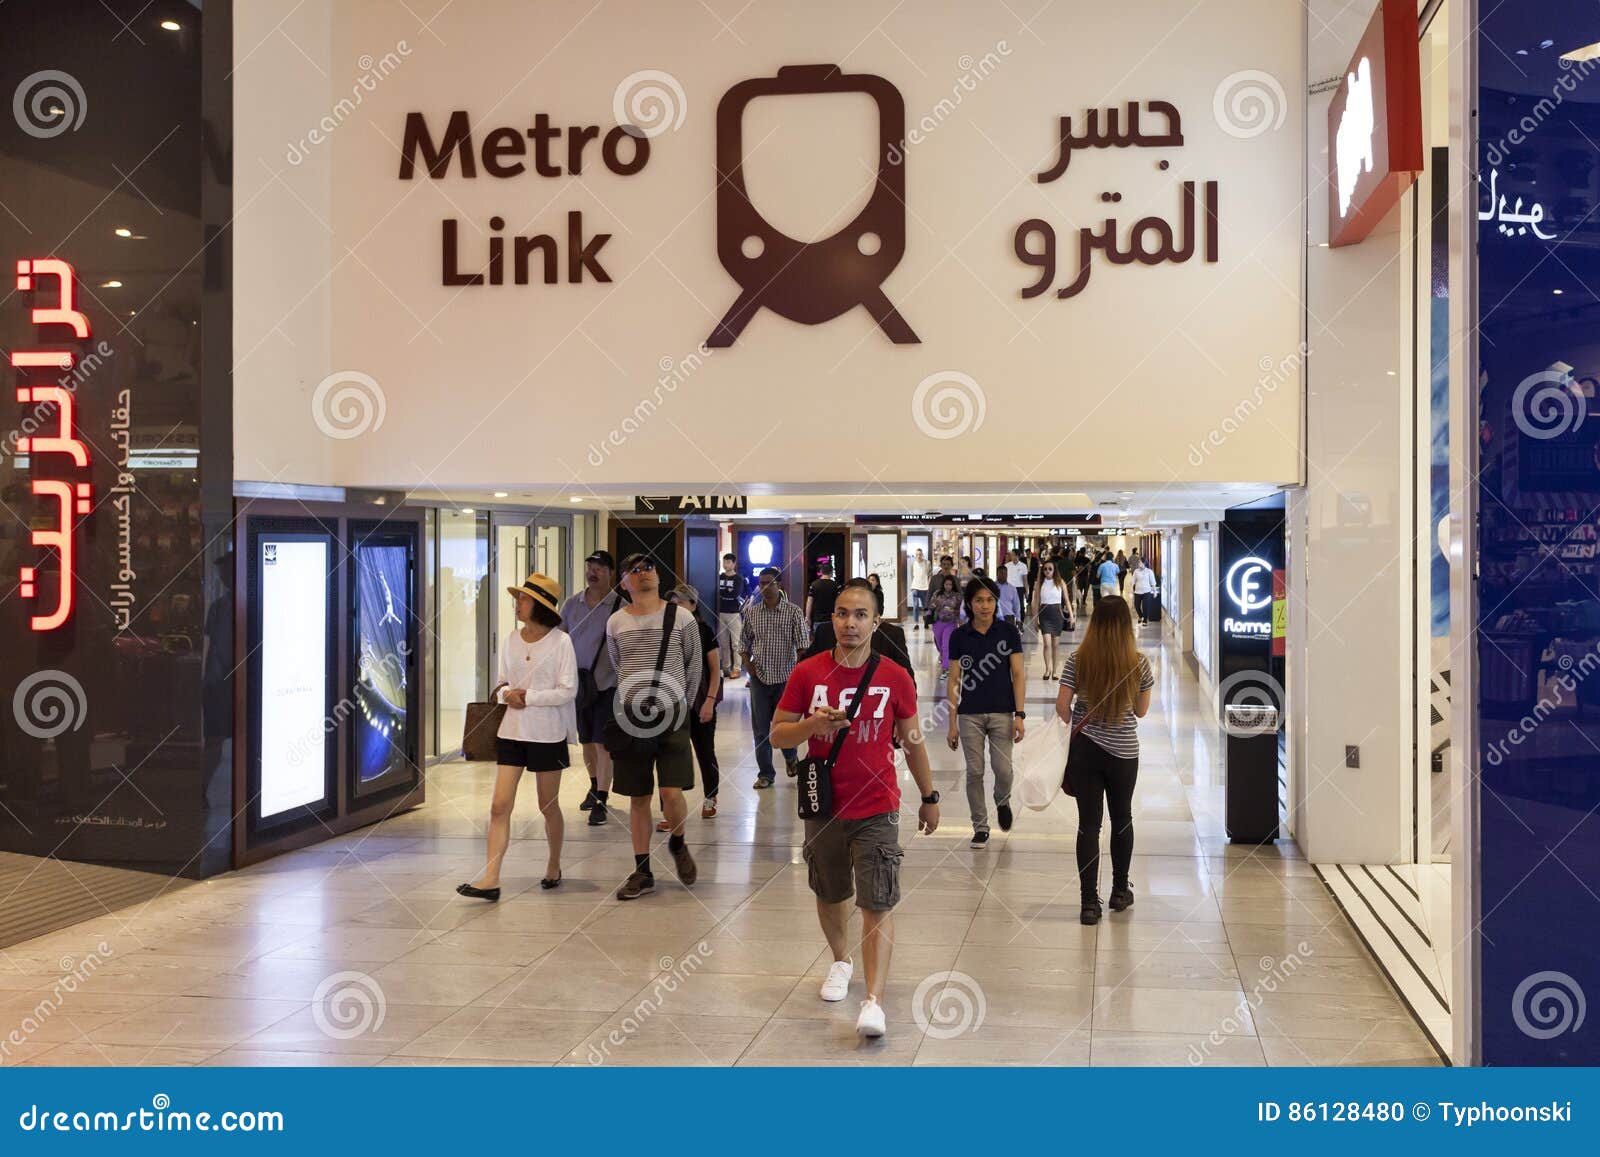 metro mall adidas